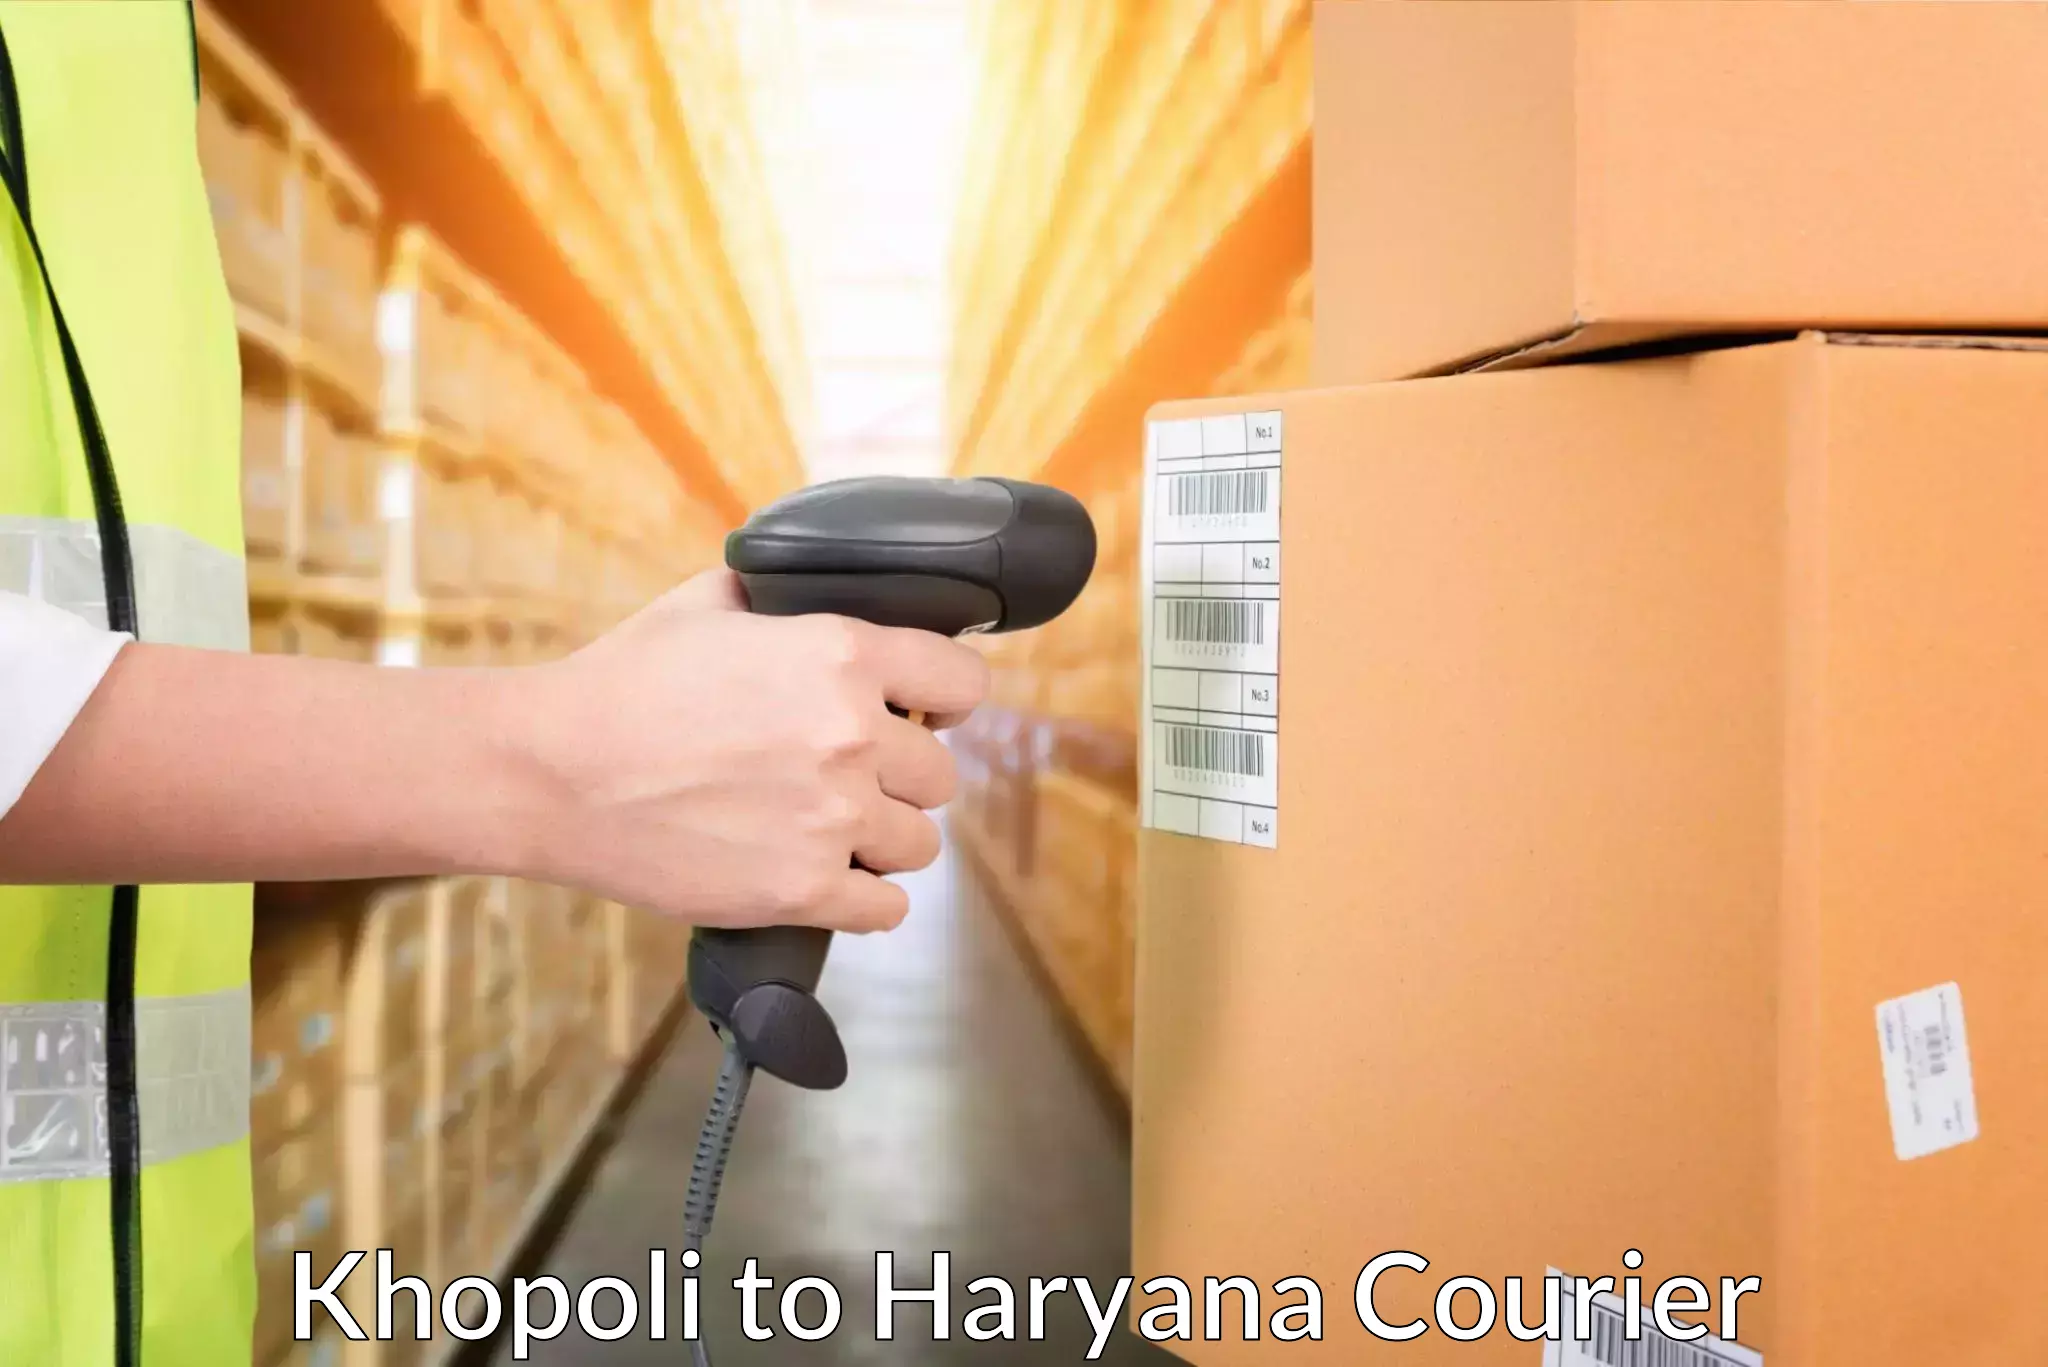 High-capacity parcel service Khopoli to NCR Haryana